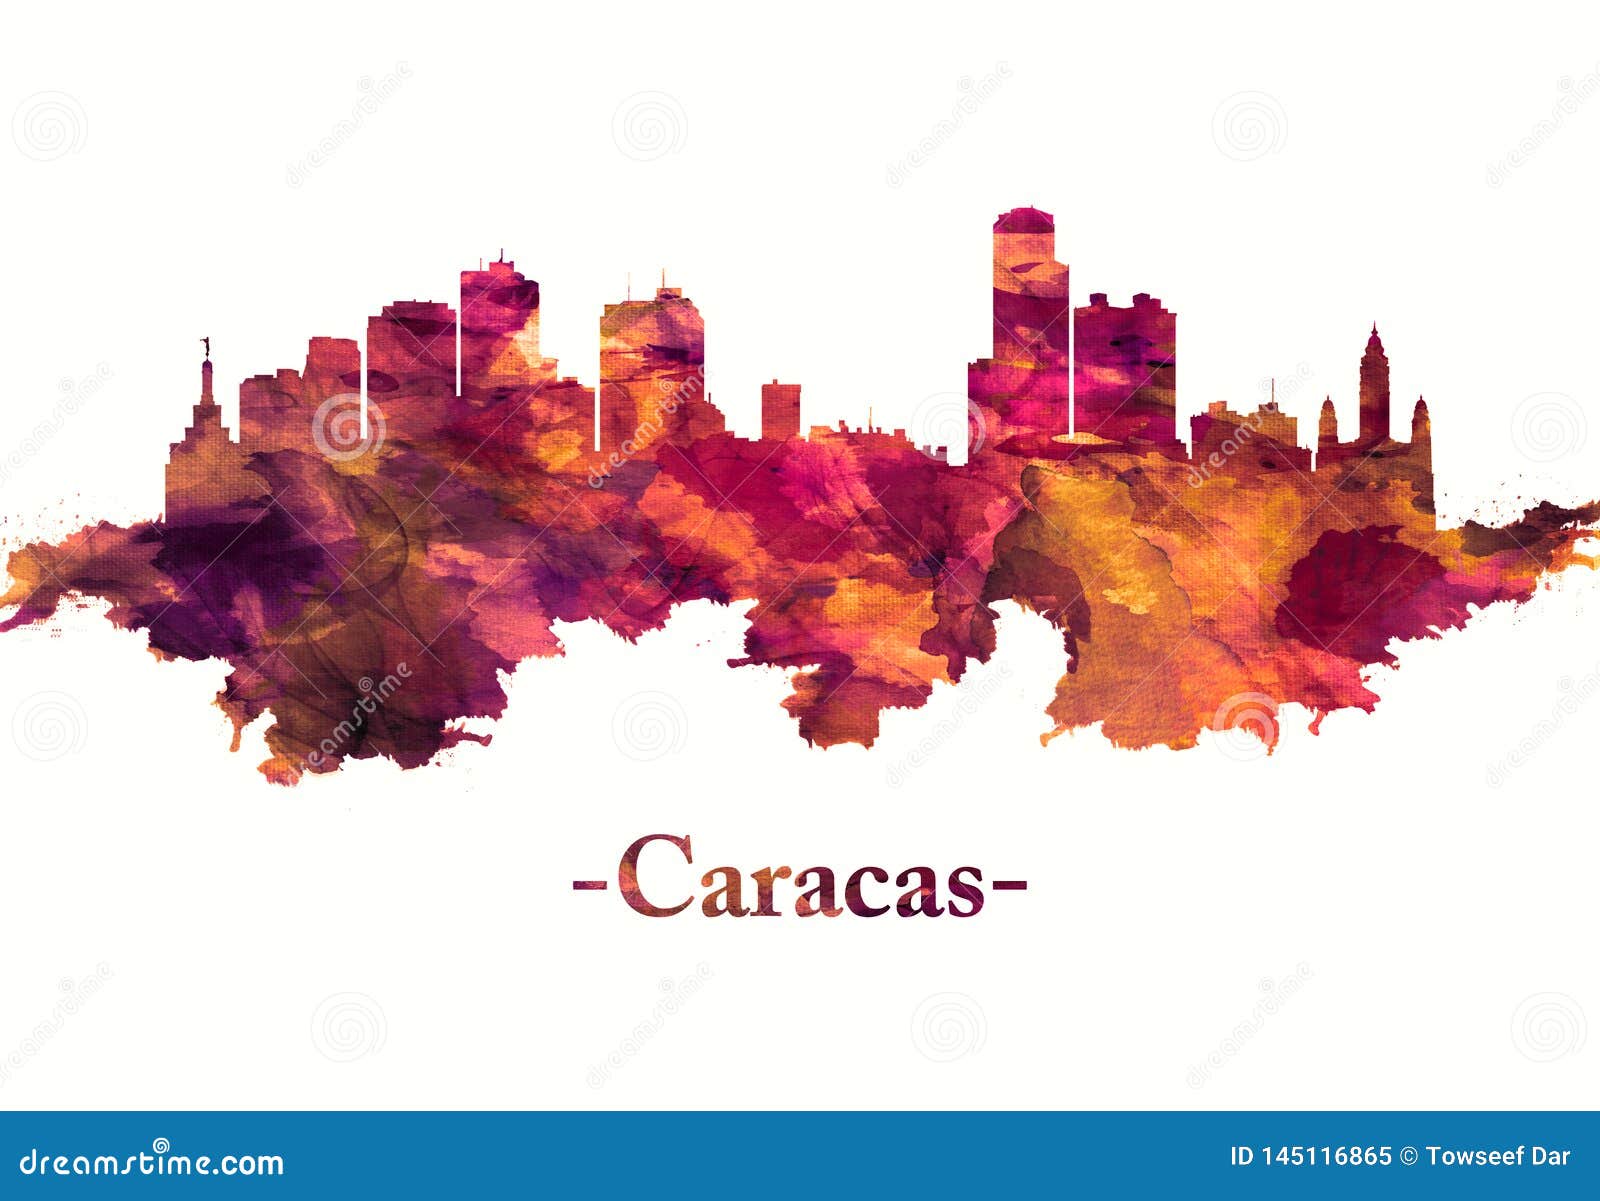 caracas venezuela skyline in red